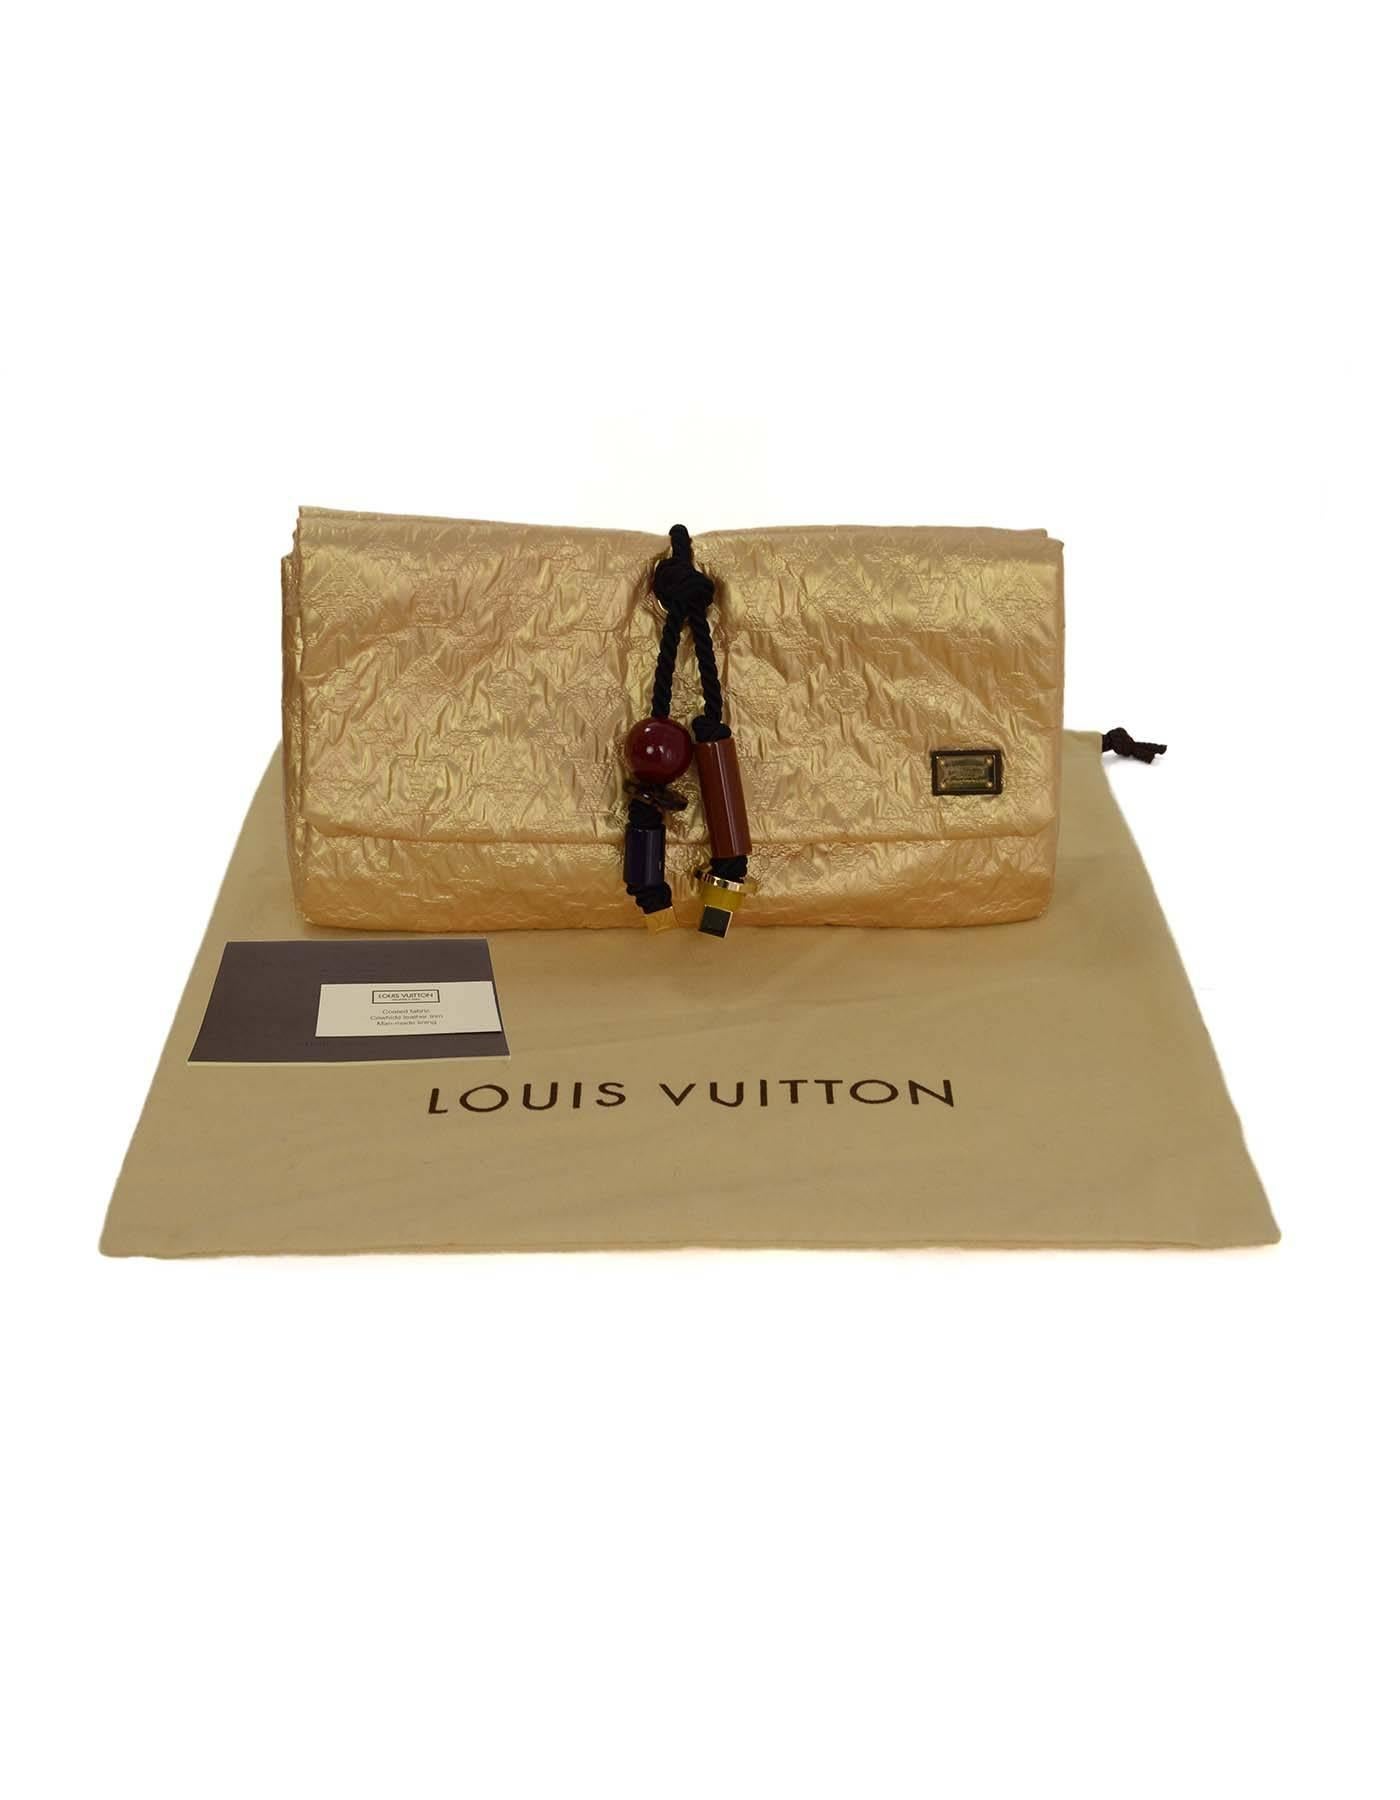 Louis Vuitton Gold Monogram African Queen Limelight Clutch Bag GHW 3